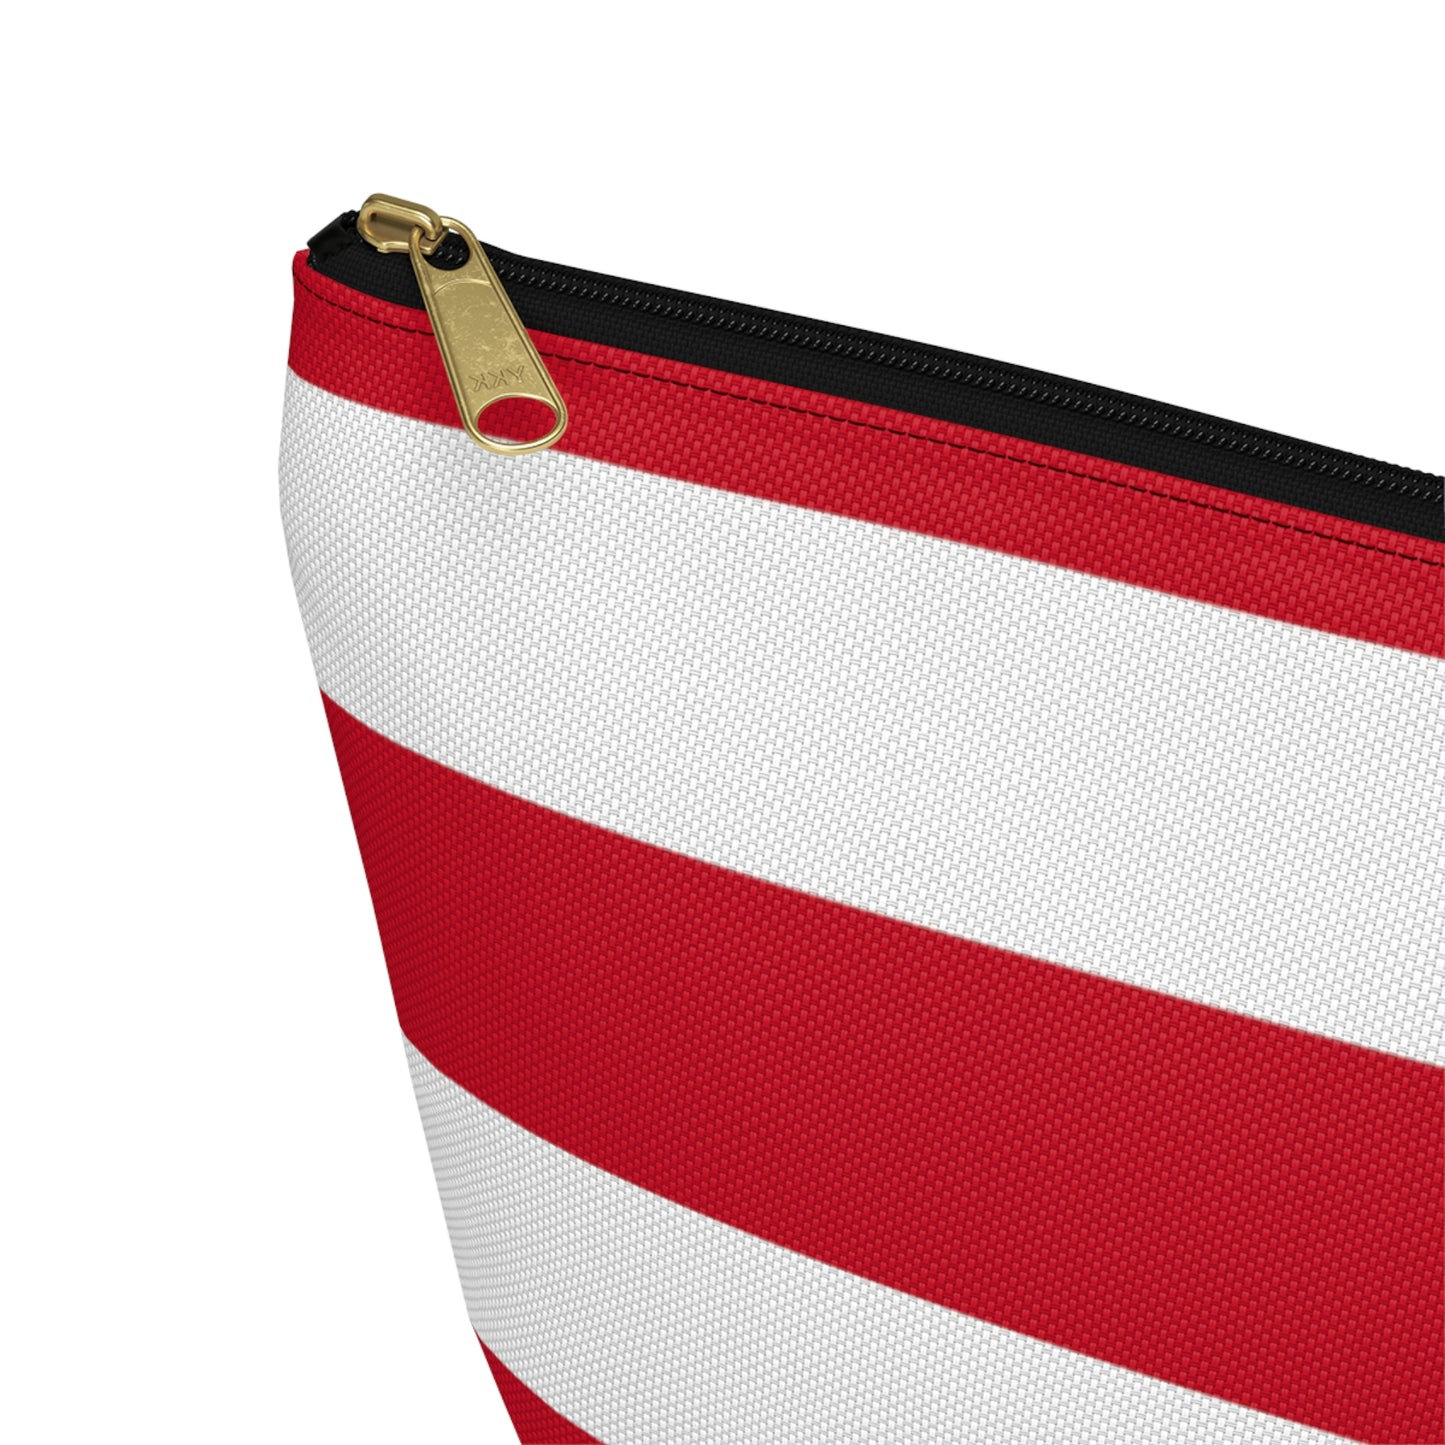 Big Bottom Zipper Pouch - Red/White Stripes